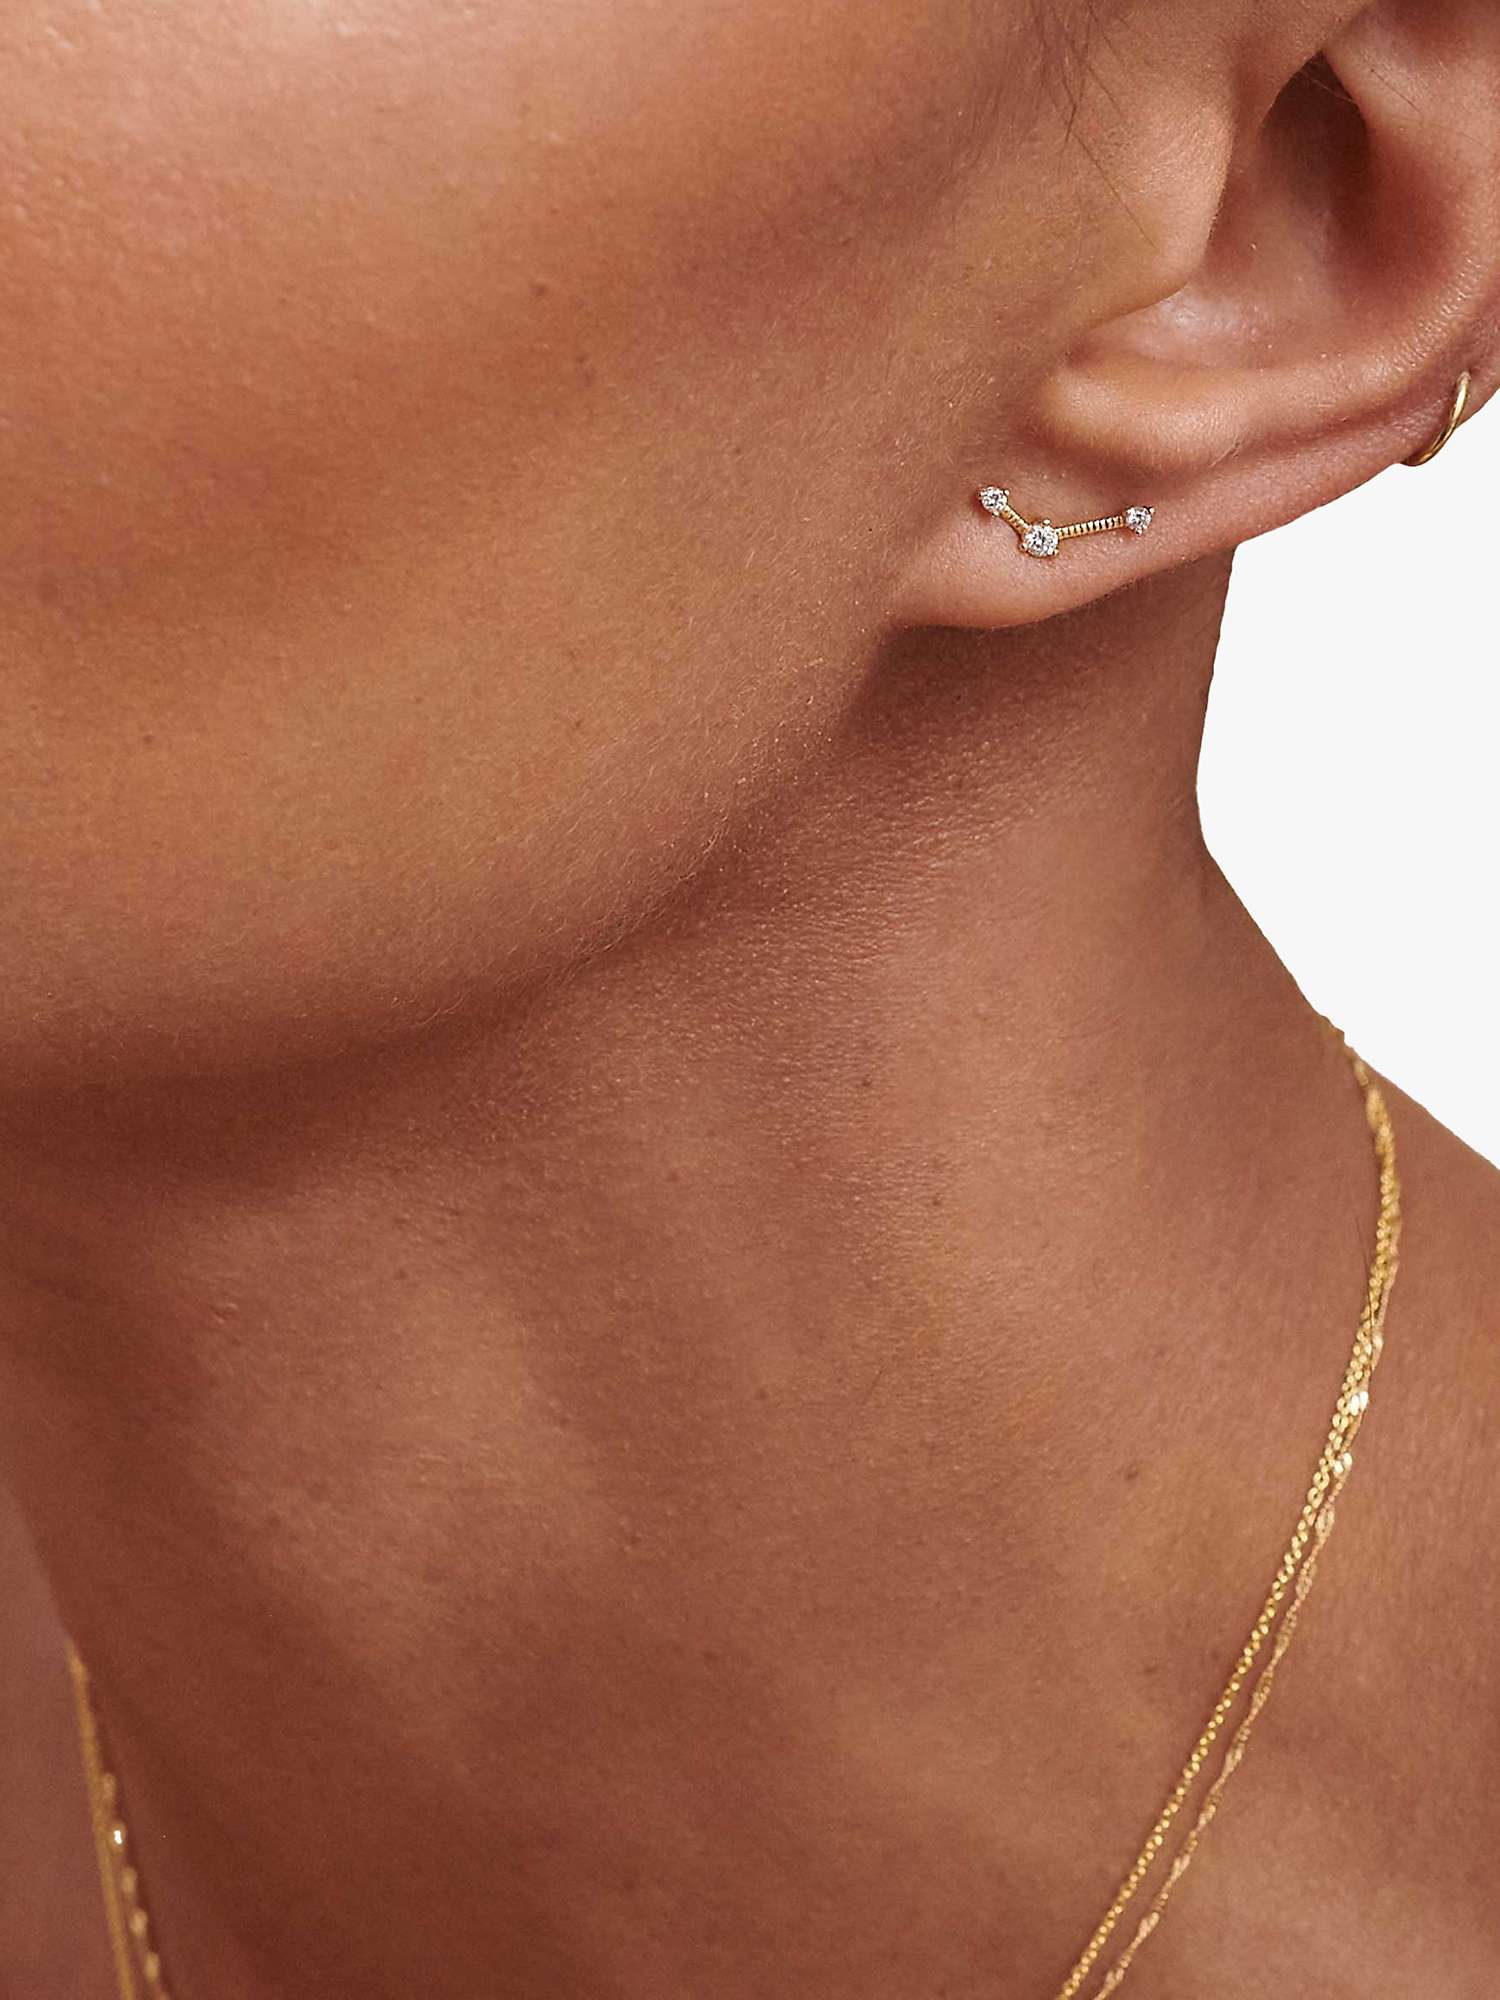 Buy Edge of Ember 14ct Gold Diamond Constellation Stud Earrings Online at johnlewis.com